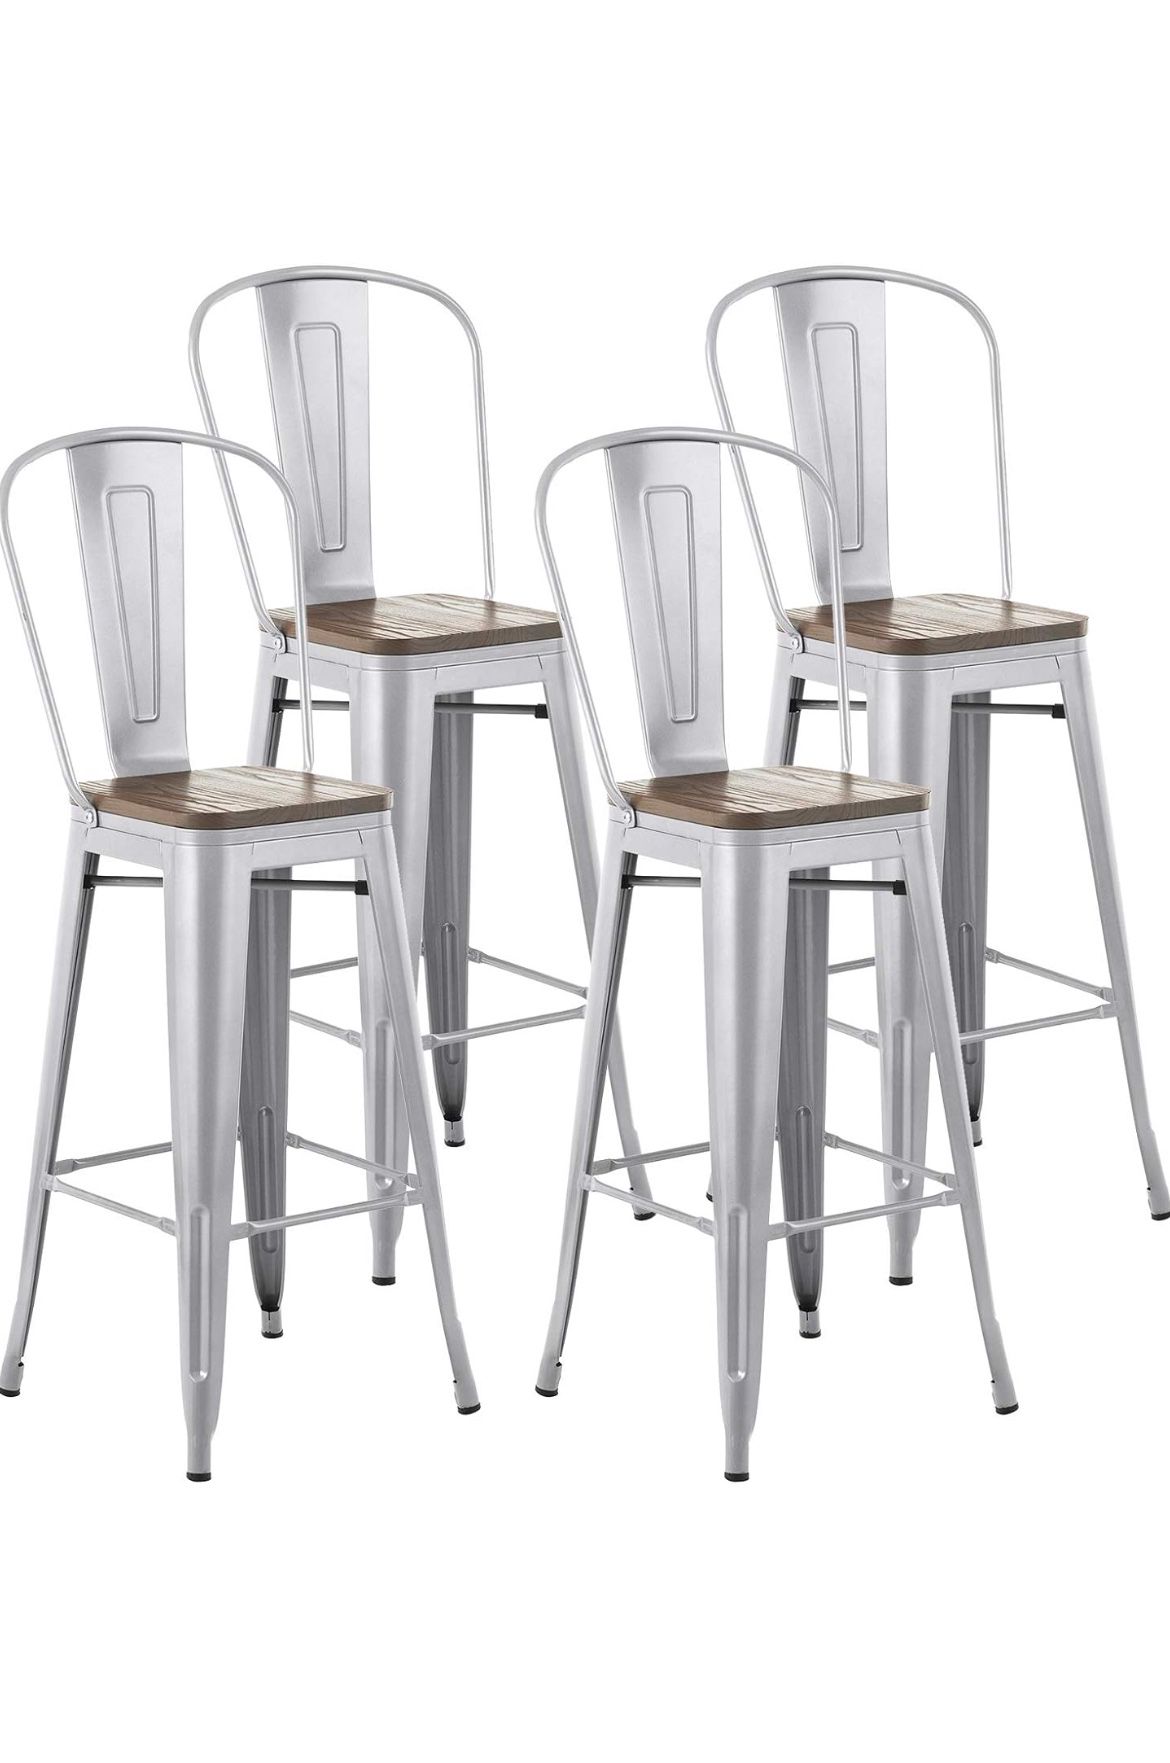 Mecor Barstool Chairs